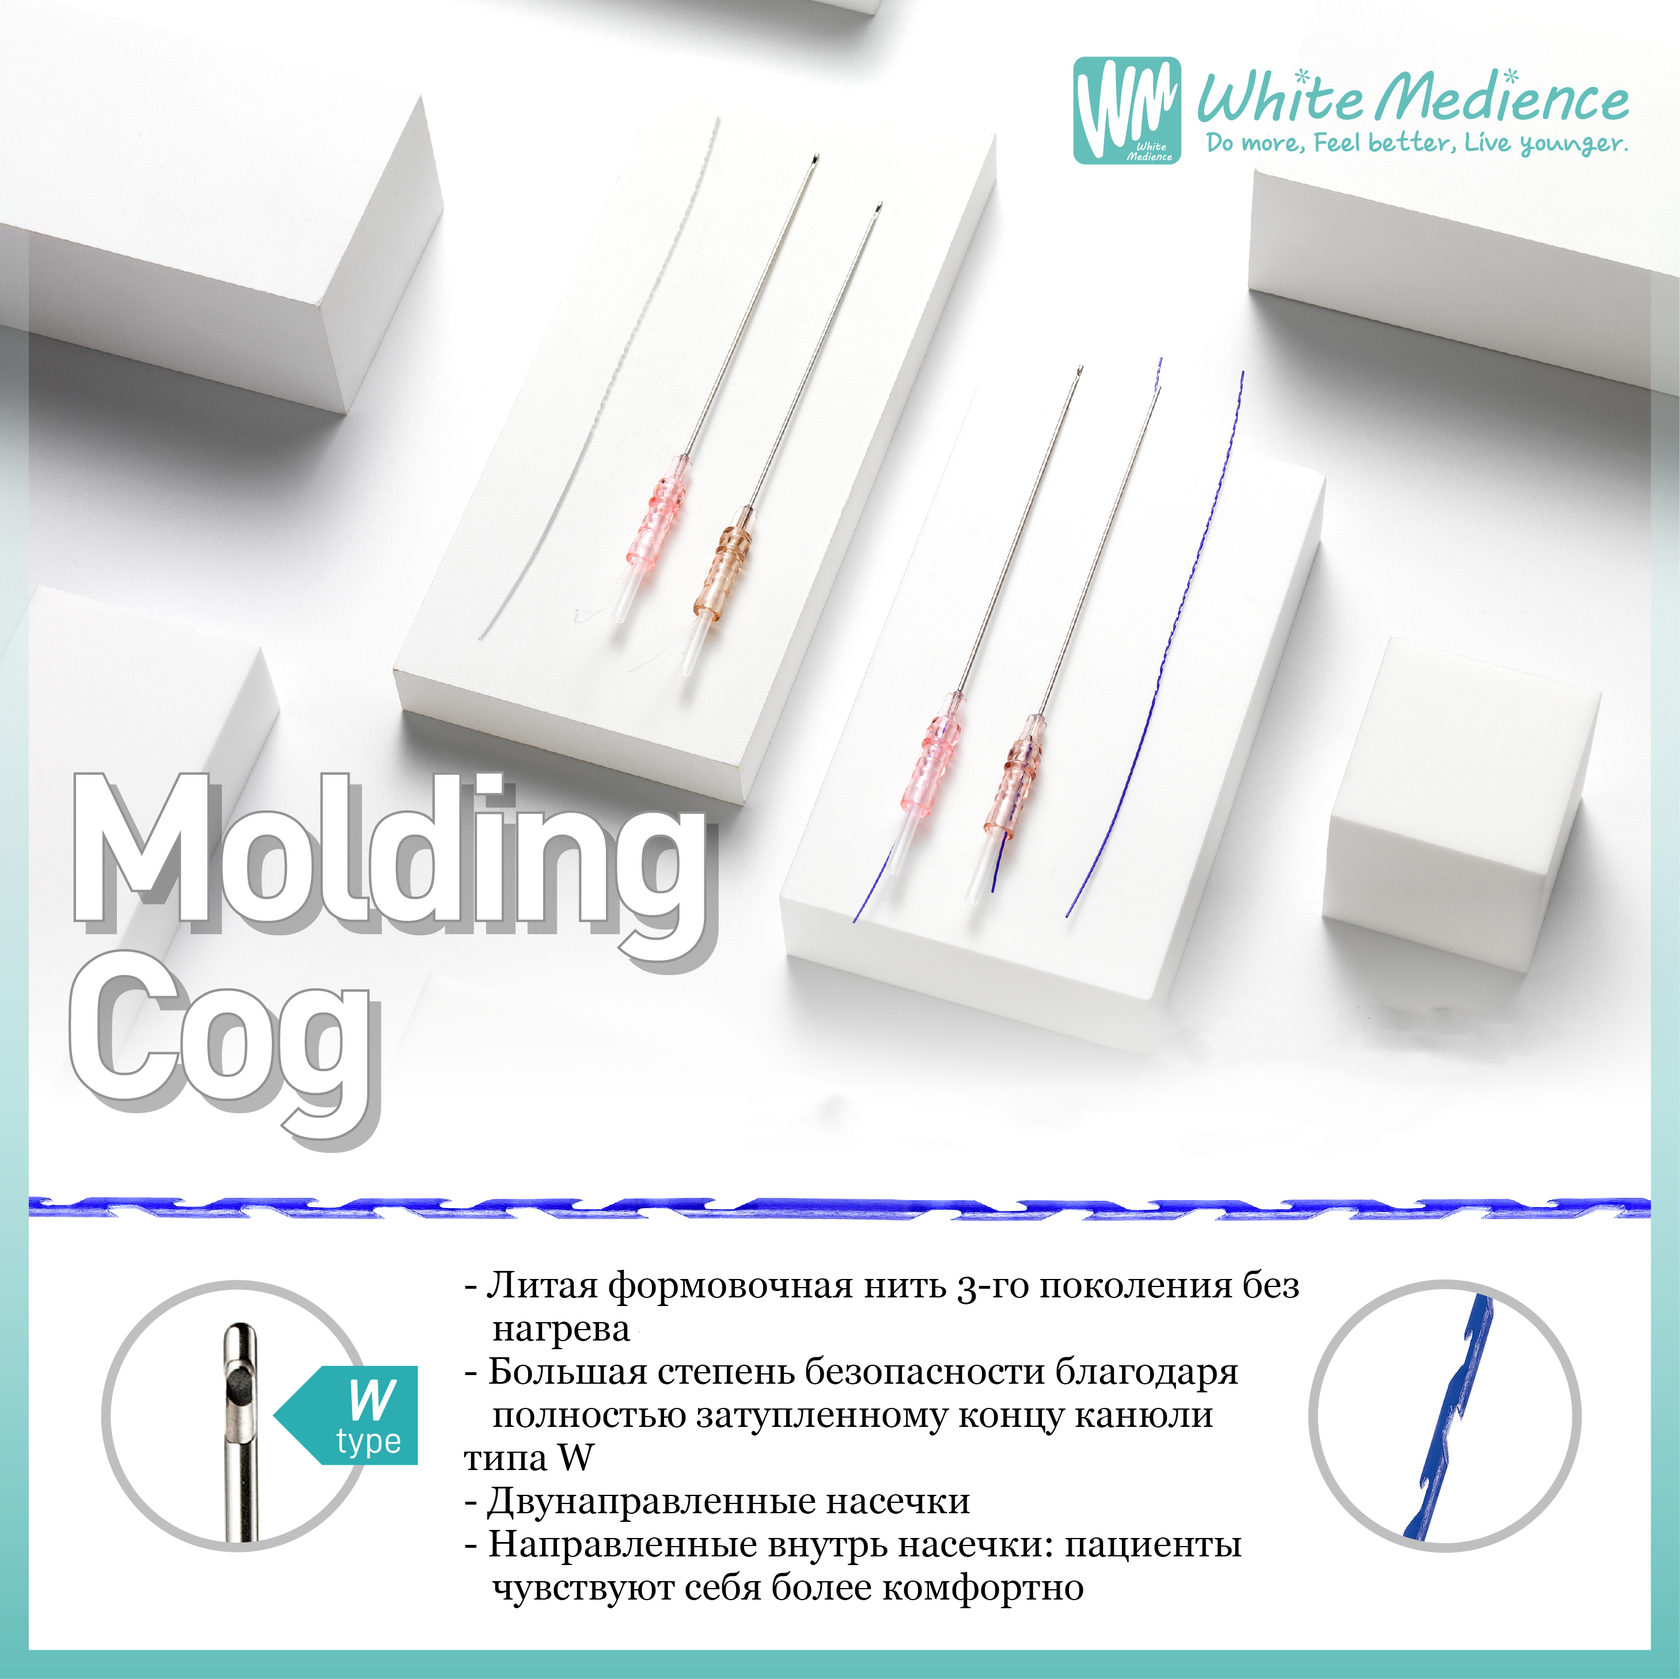 Molding cog 18-100 w